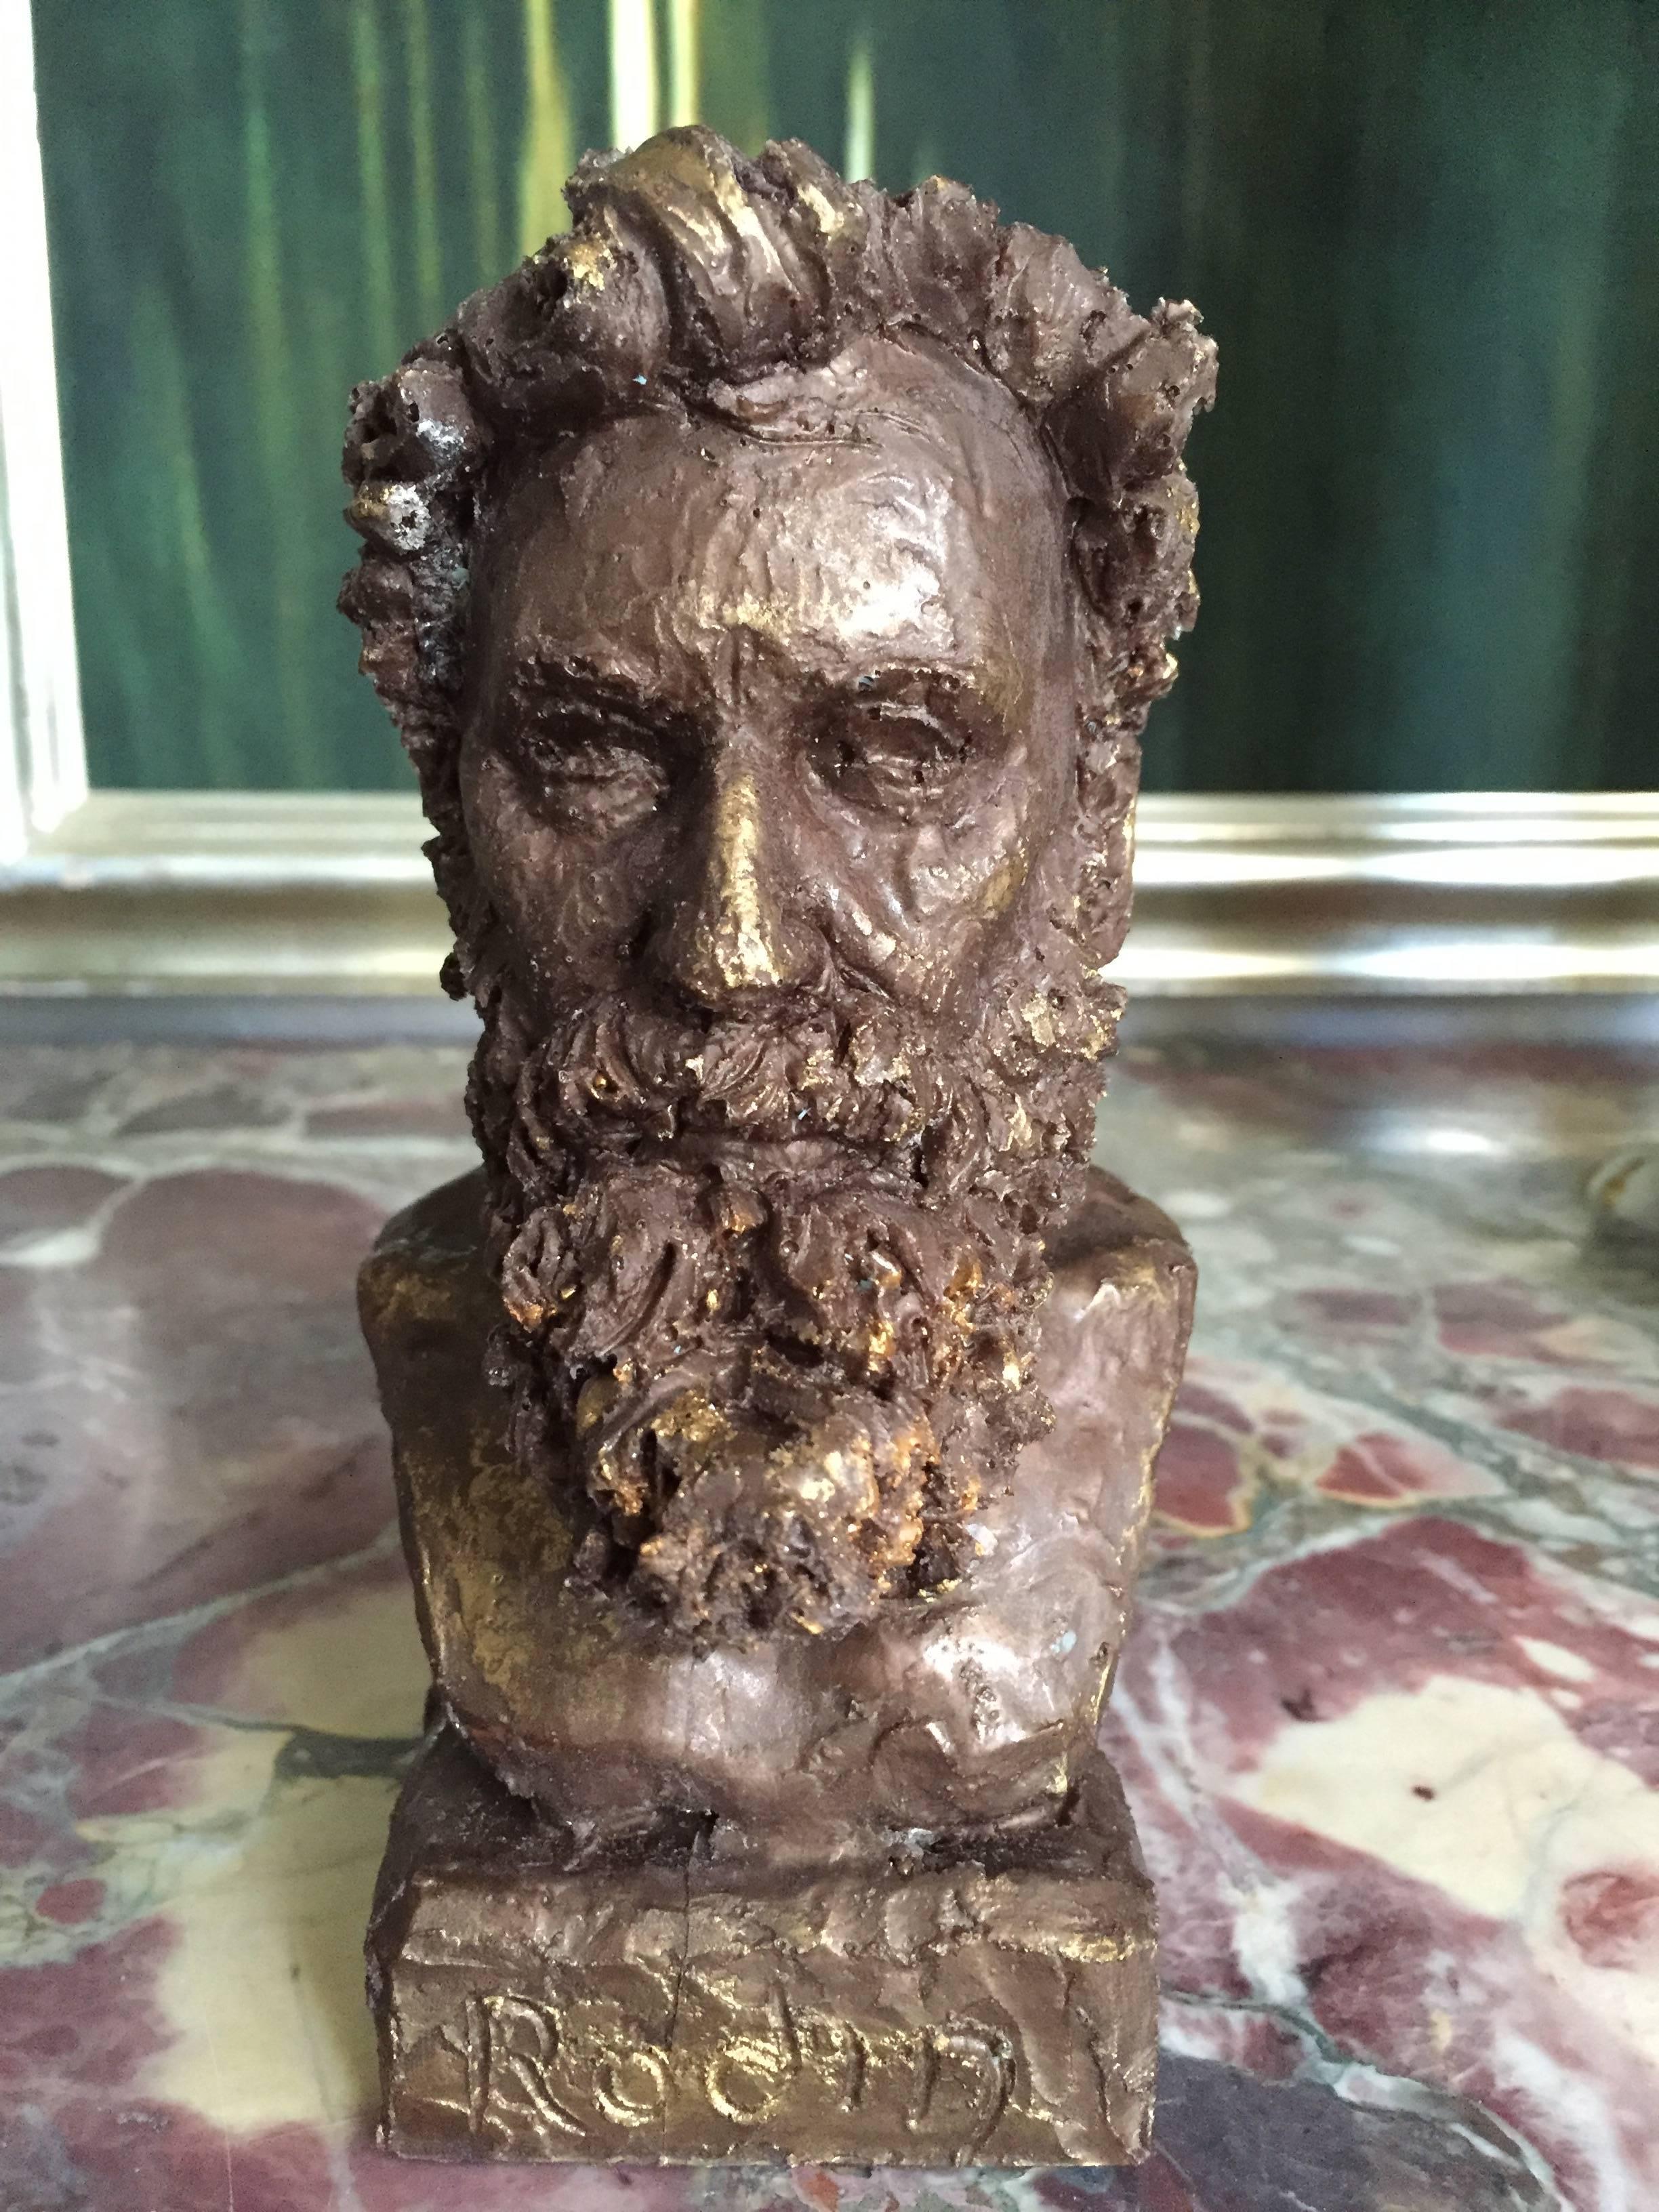 American Bronze Bust of Rodin by Sculptor Daniel Altshuler, 2016